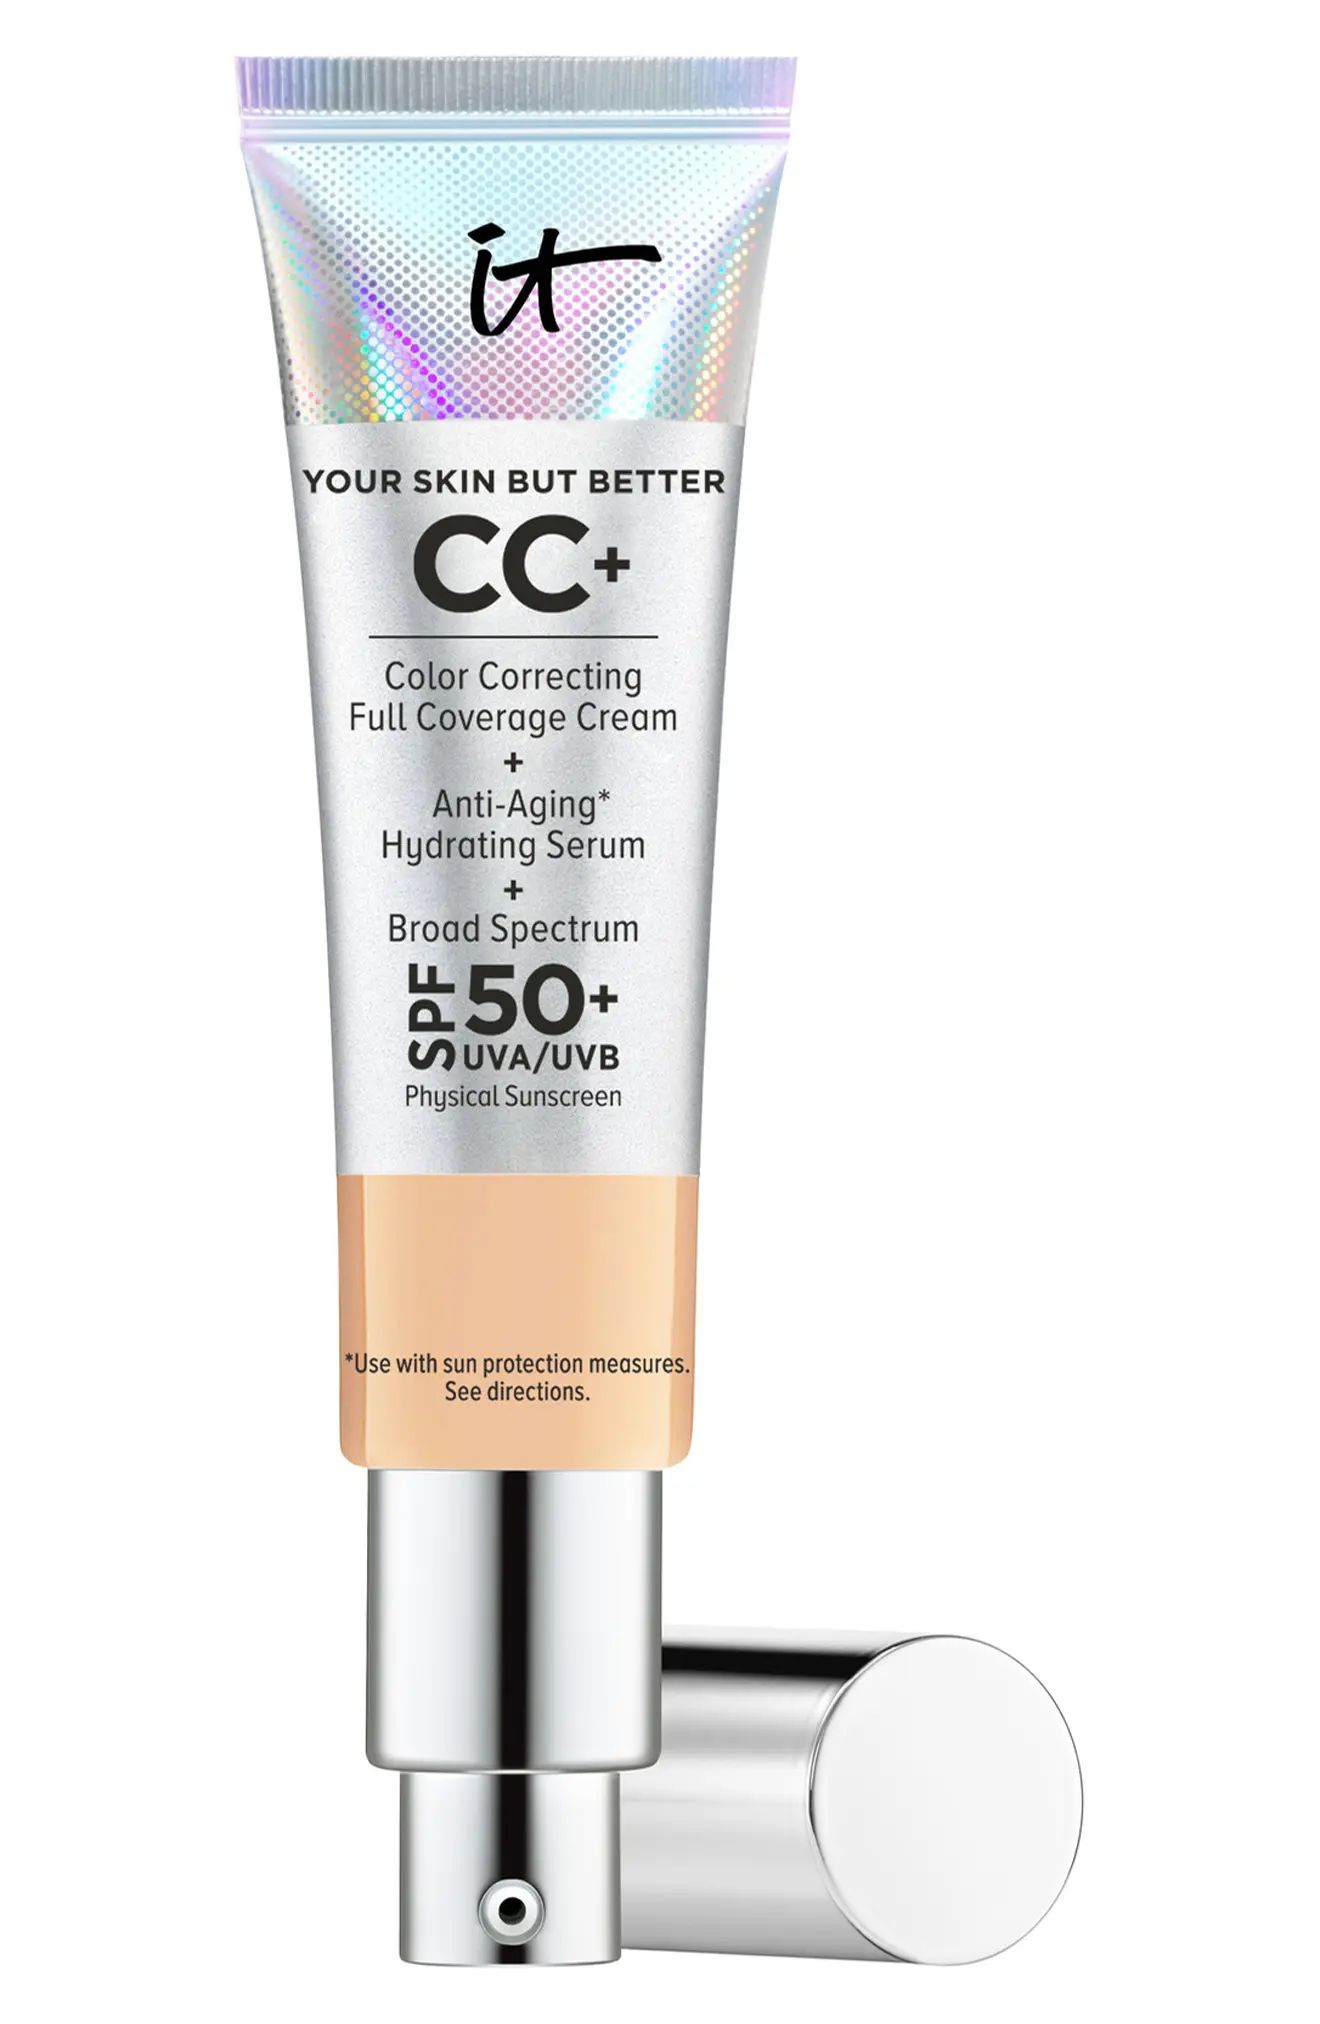 IT Cosmetics CC+ Color Correcting Full Coverage Cream SPF 50+ in Medium at Nordstrom, Size 1.08 Oz | Nordstrom